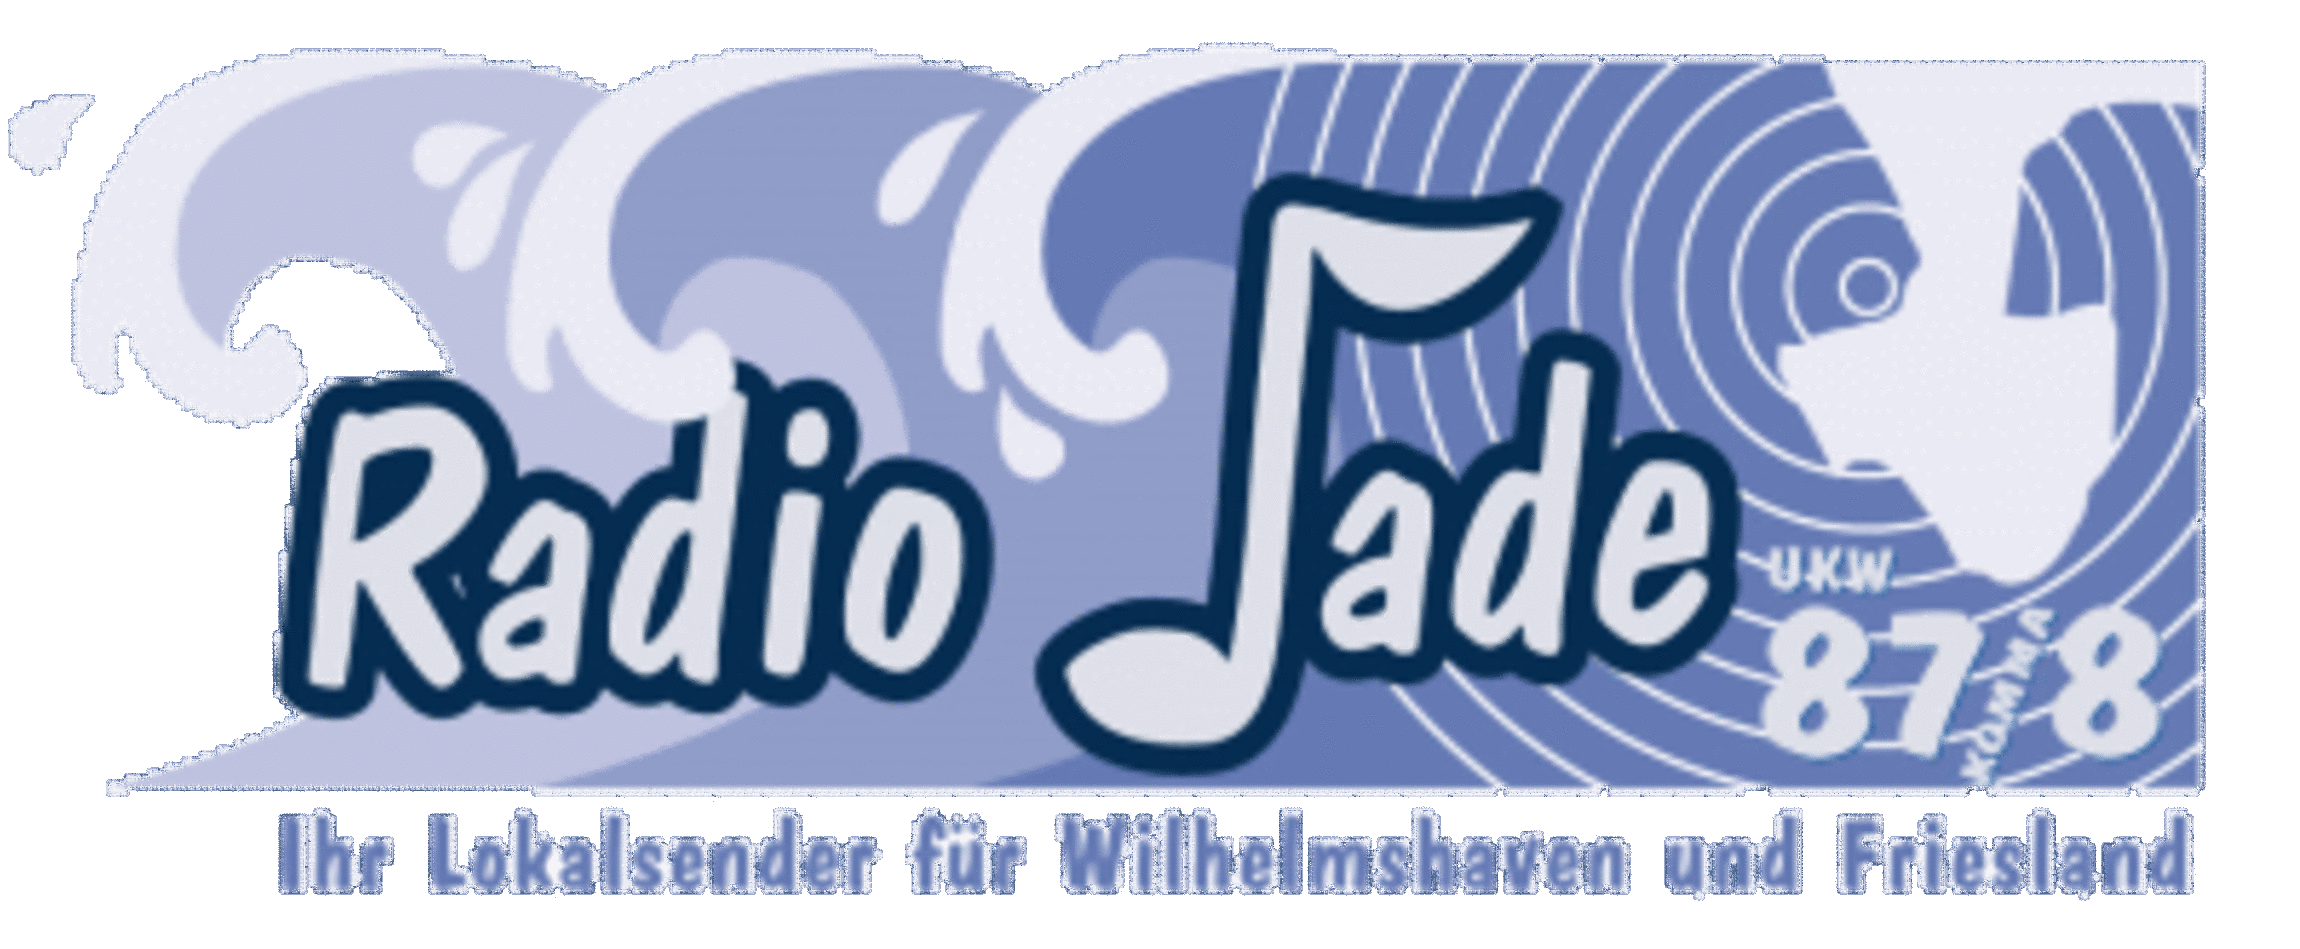 radio jade